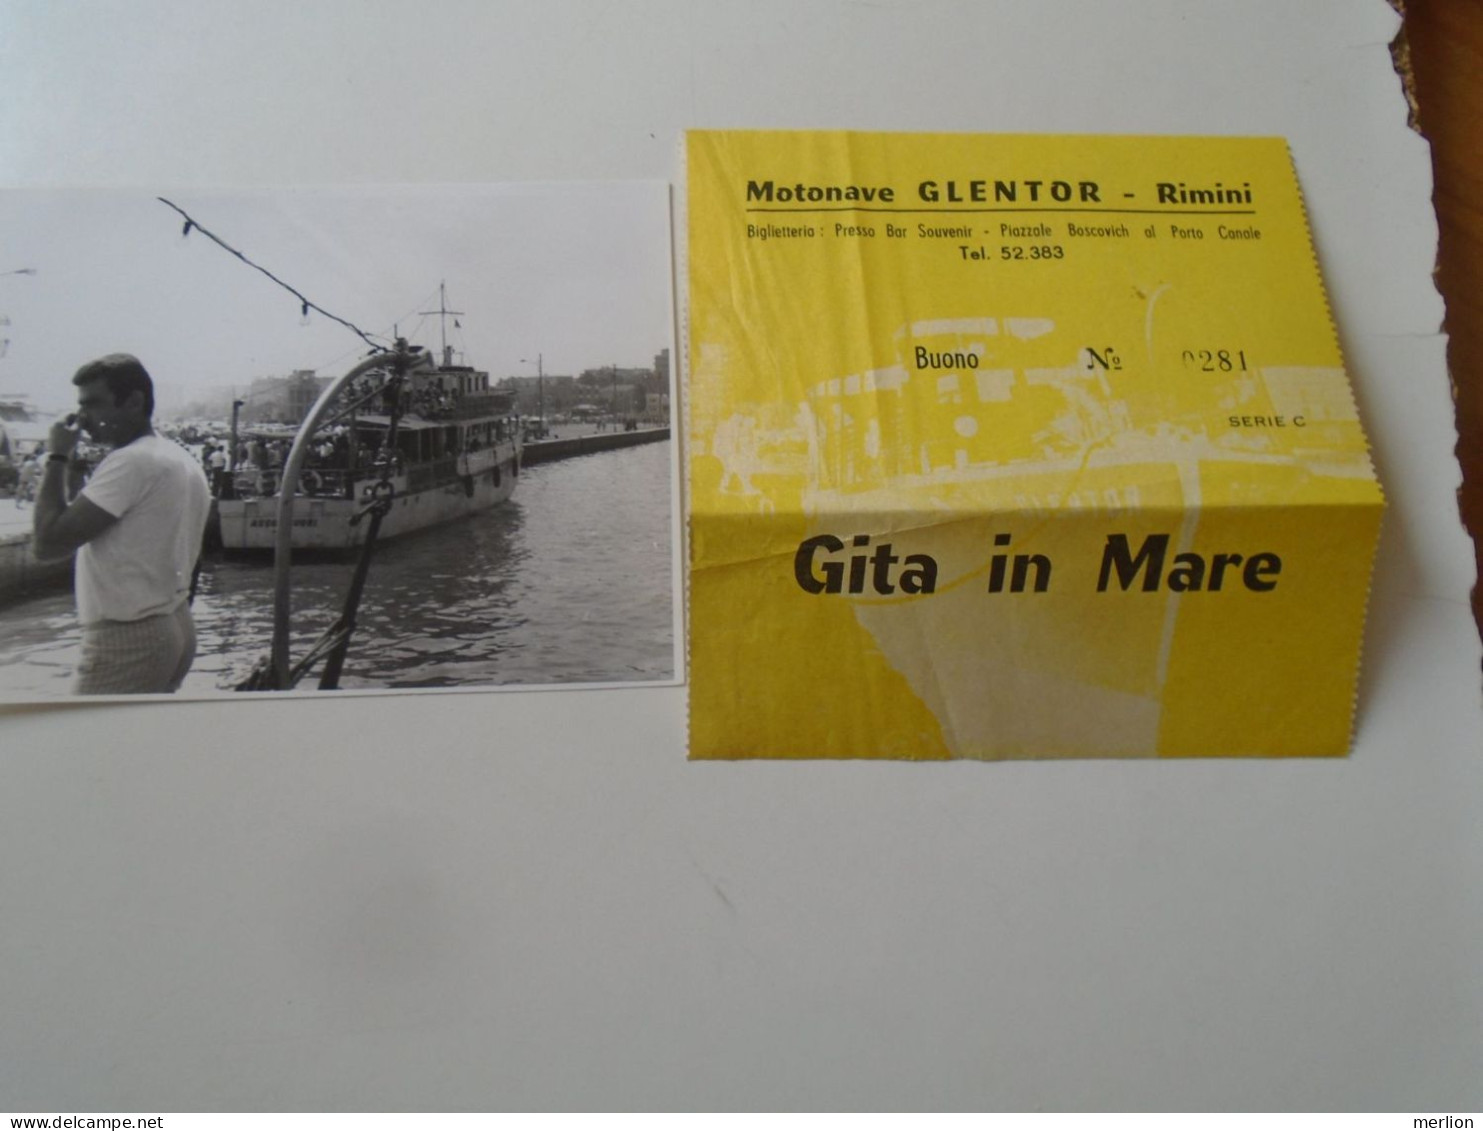 D199212     Old  Ticket  1960's  Italy  Italia  - Motonavew Glentor  Rimini - Gita In Mare  - Photo - Europa